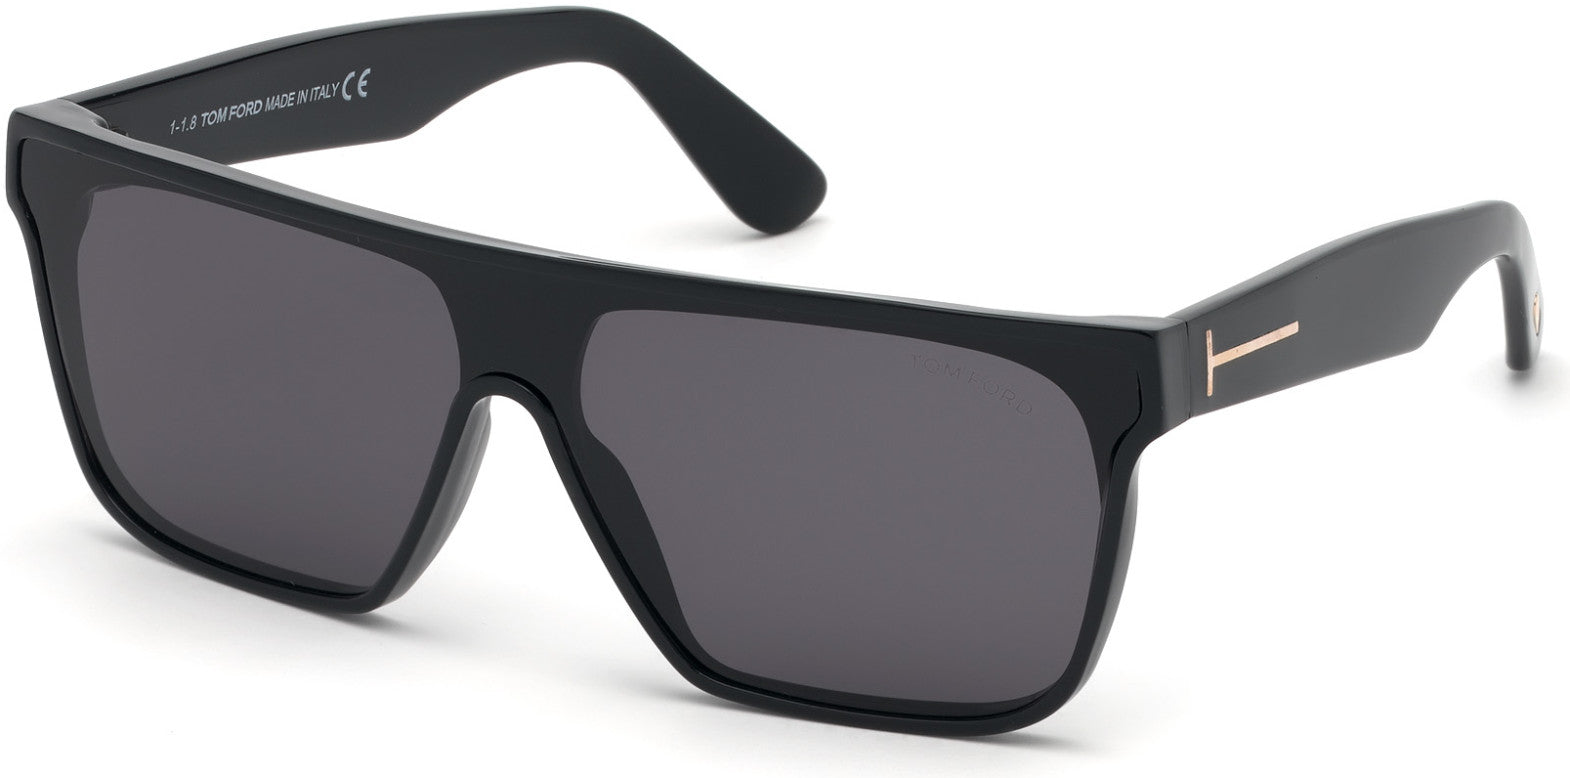 Tom Ford FT0709 Whyat Geometric Sunglasses 01A-01A - Shiny Black, Shiny Rose Gold / Smoke Lenses